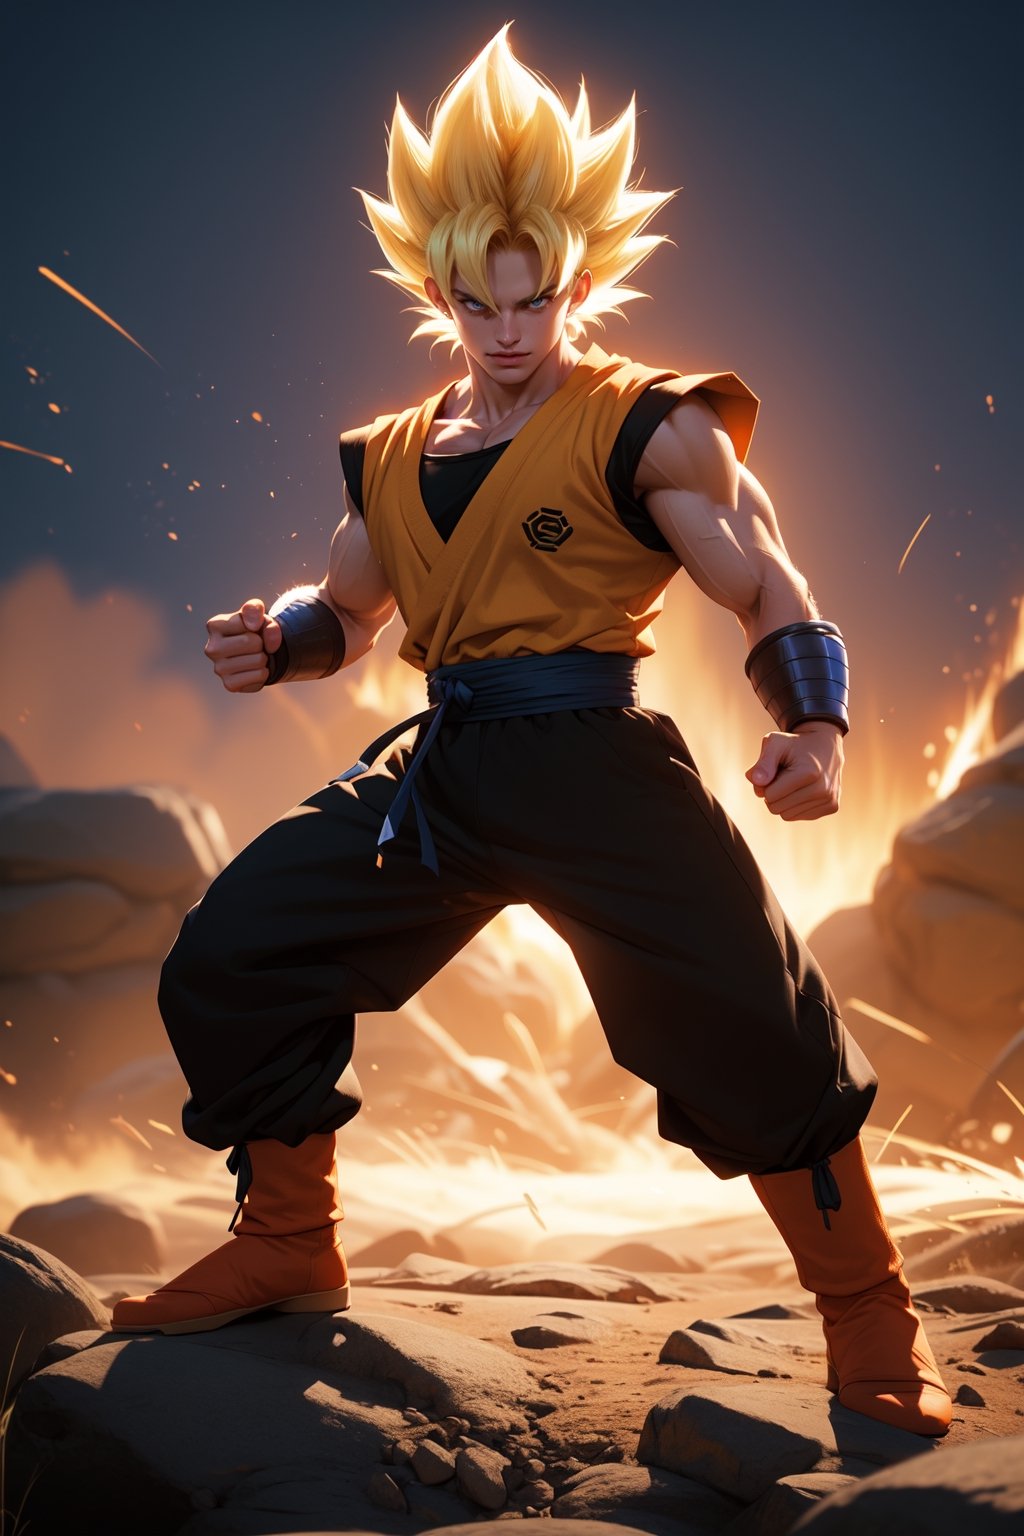 Dragon Ball, Son Goku, Super Saiyan 2, Kamehameha stance, realistic, 4K, golden warrior, blond hair, Japanese